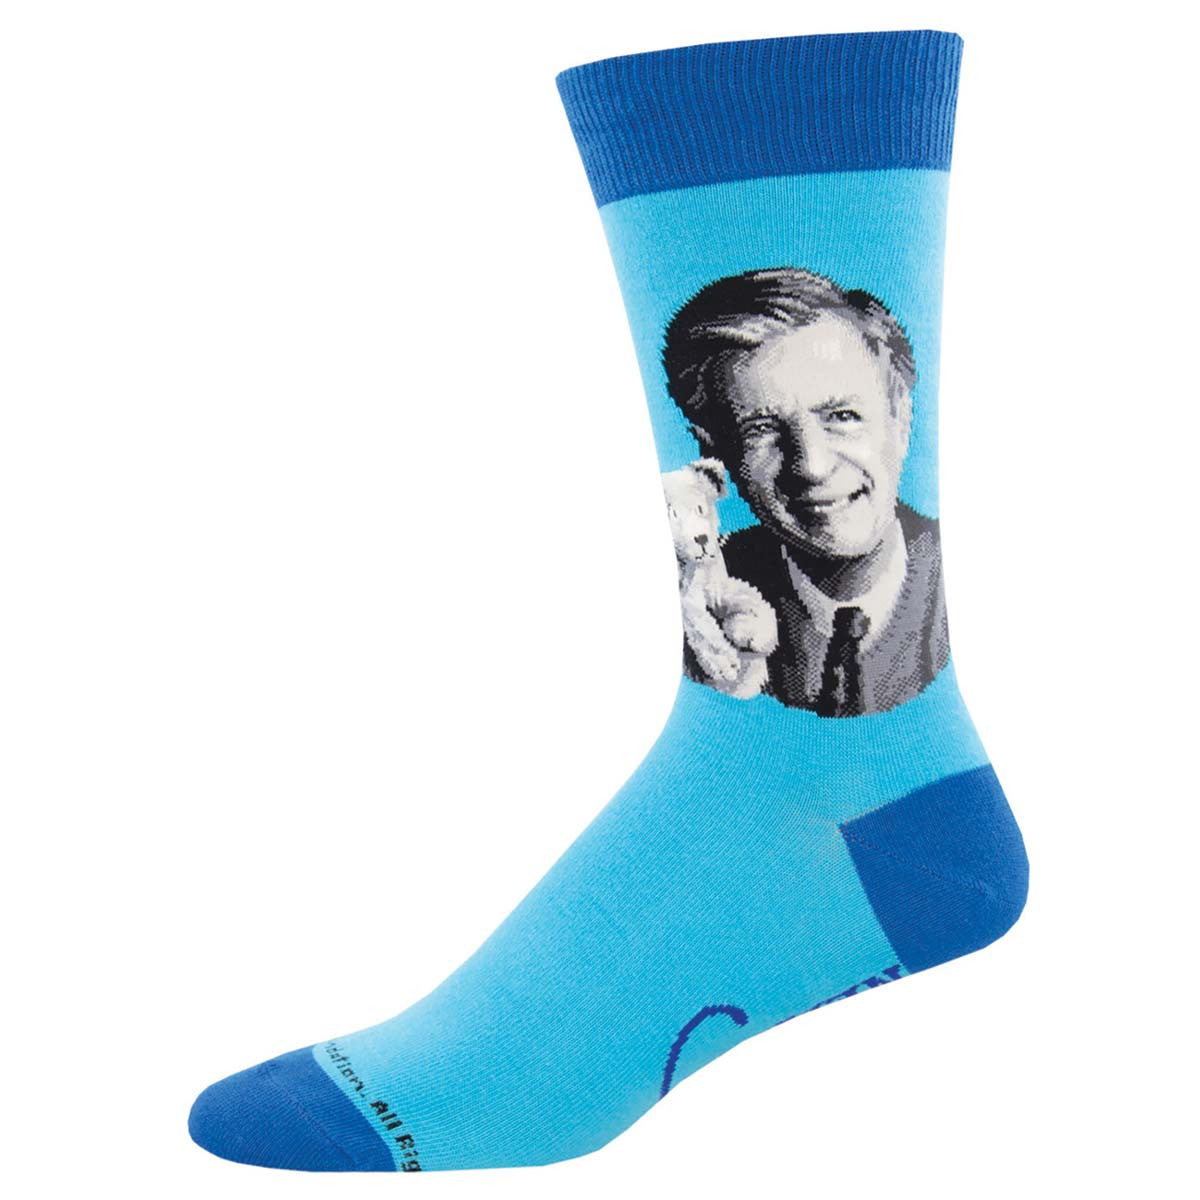 Mister Rogers Portrait blue crew sock